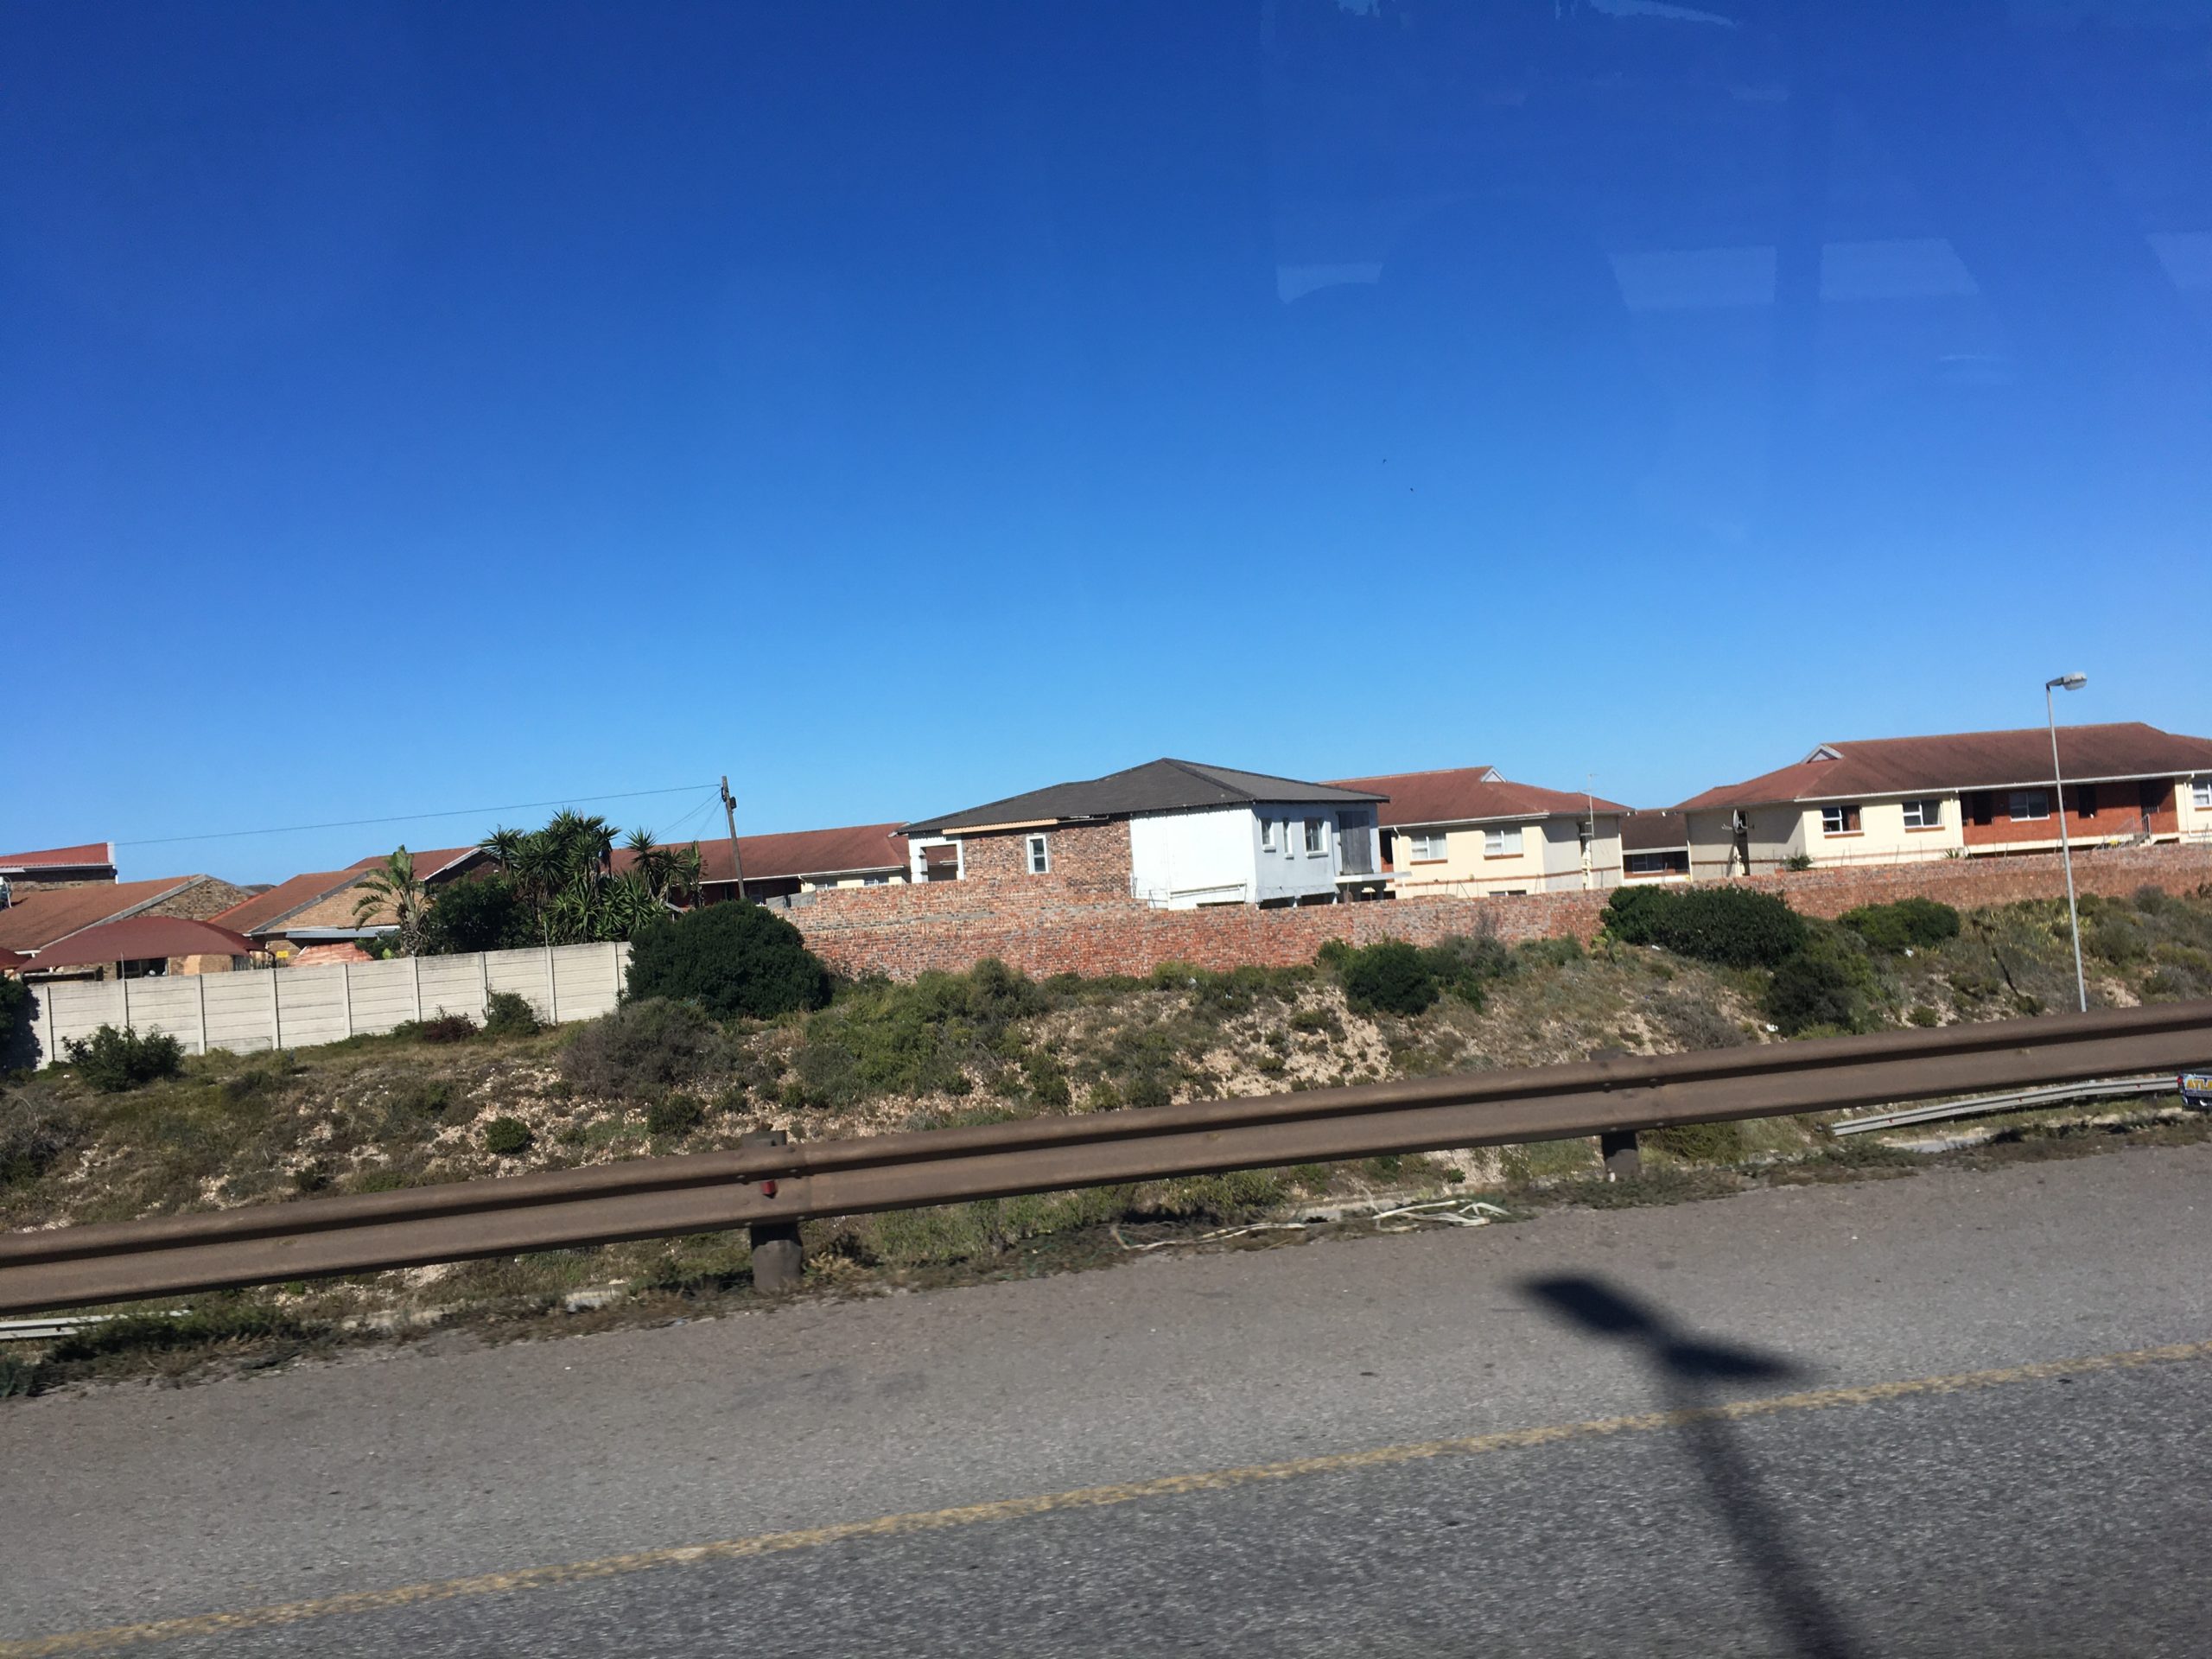 Aspirational suburb in Durban, SA